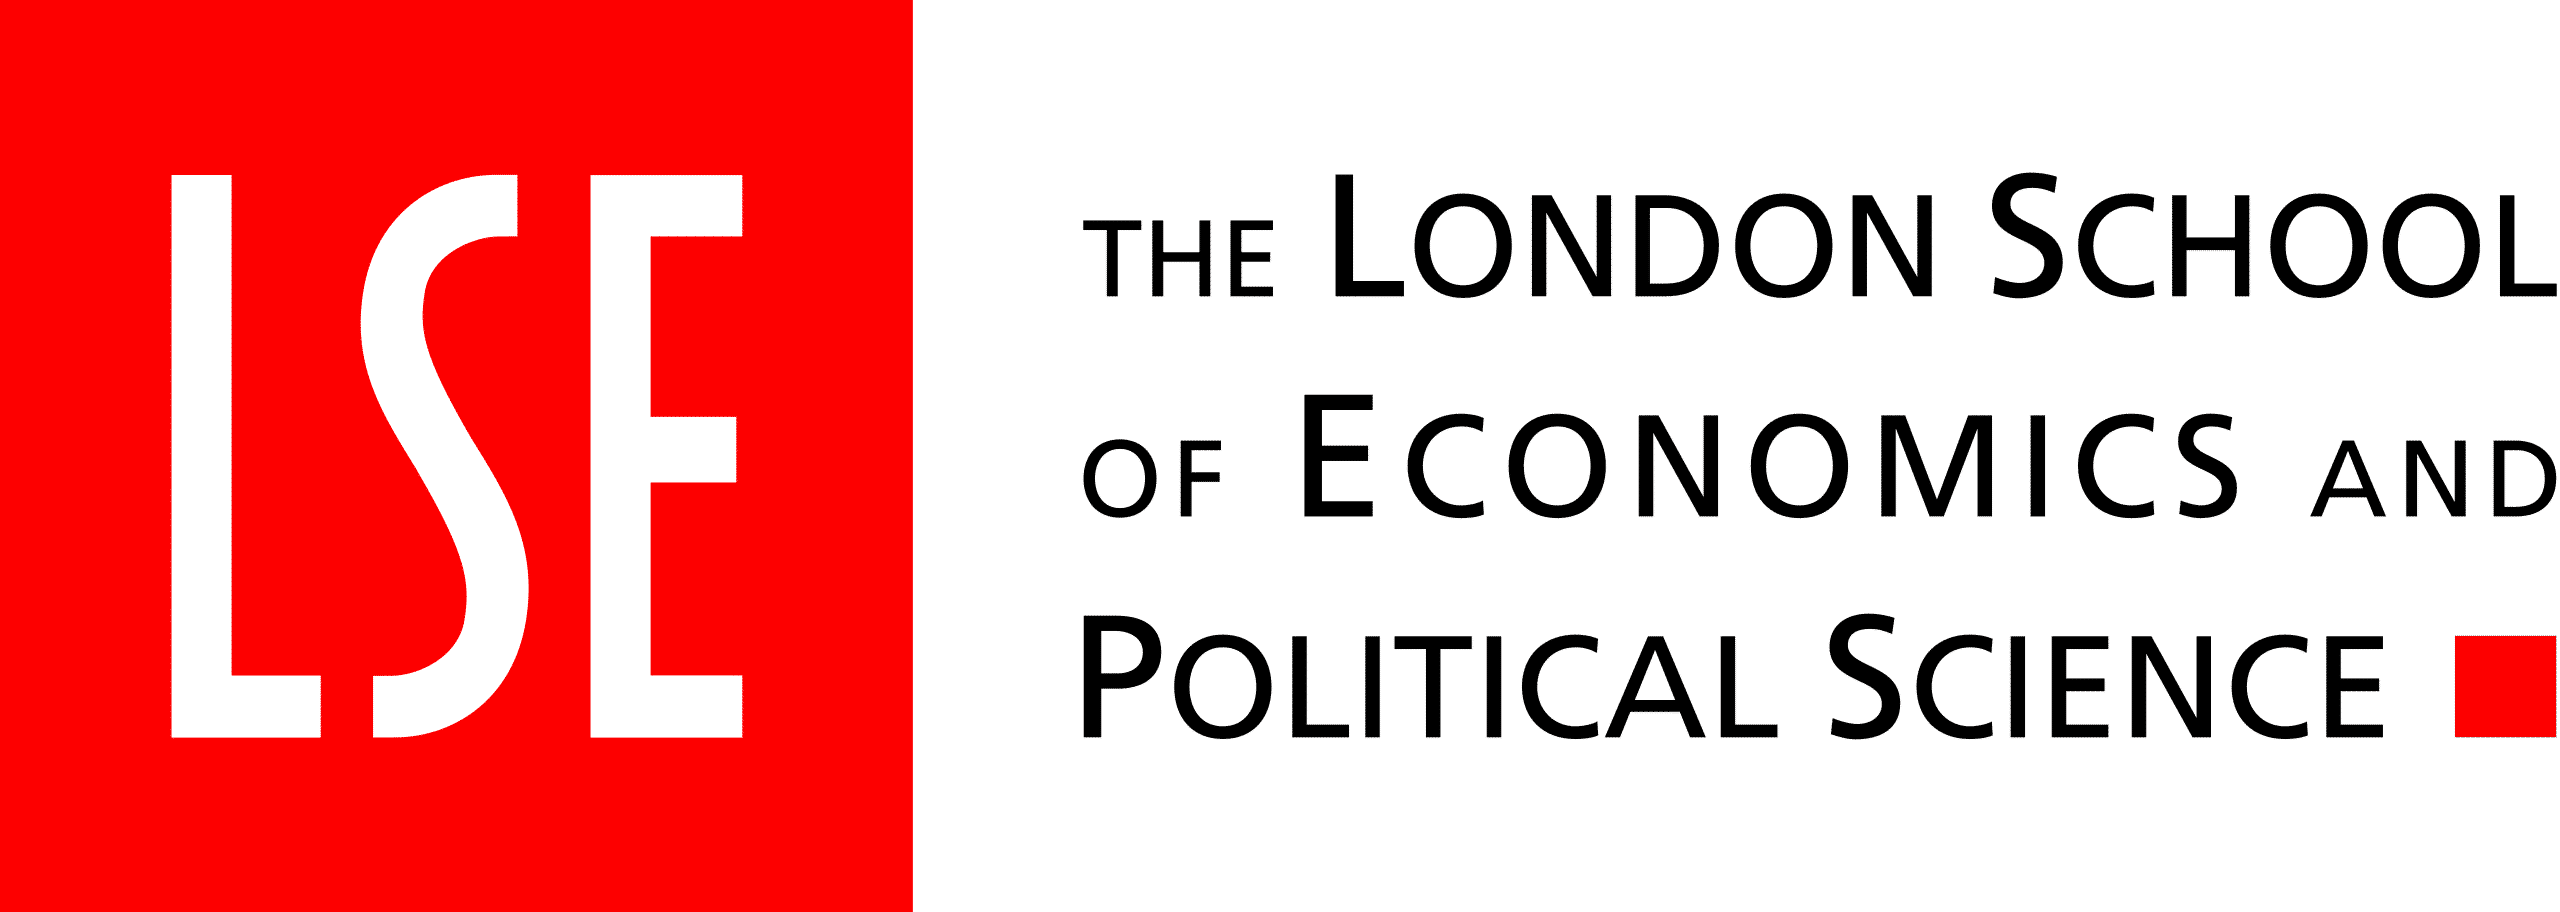 London_school_of_economics_logo